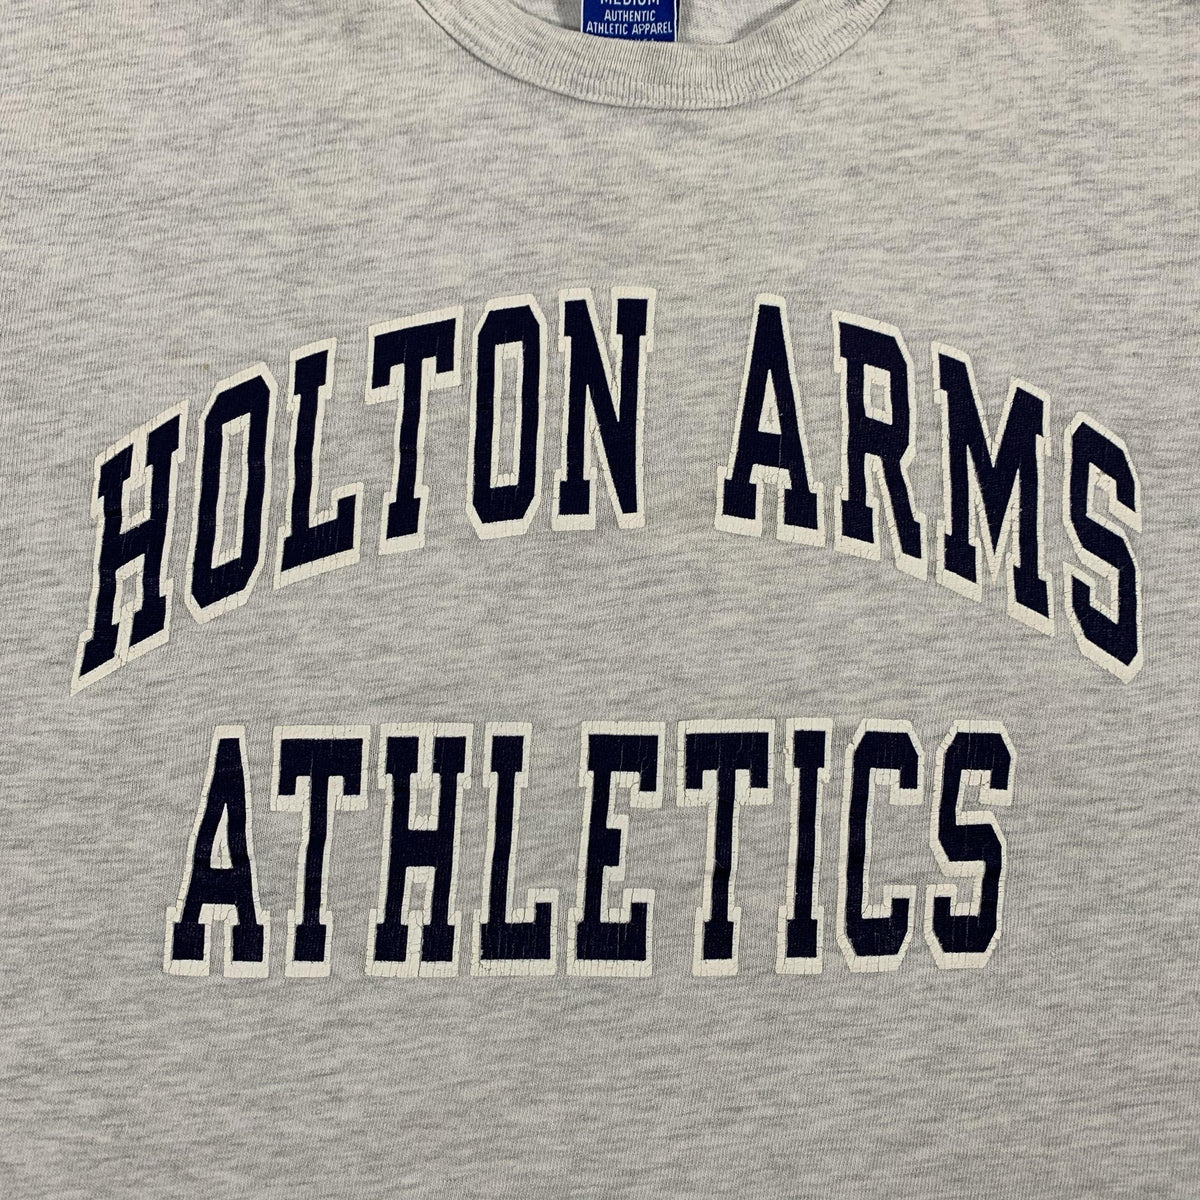 Vintage Champion “Holton Arms” T-Shirt - jointcustodydc